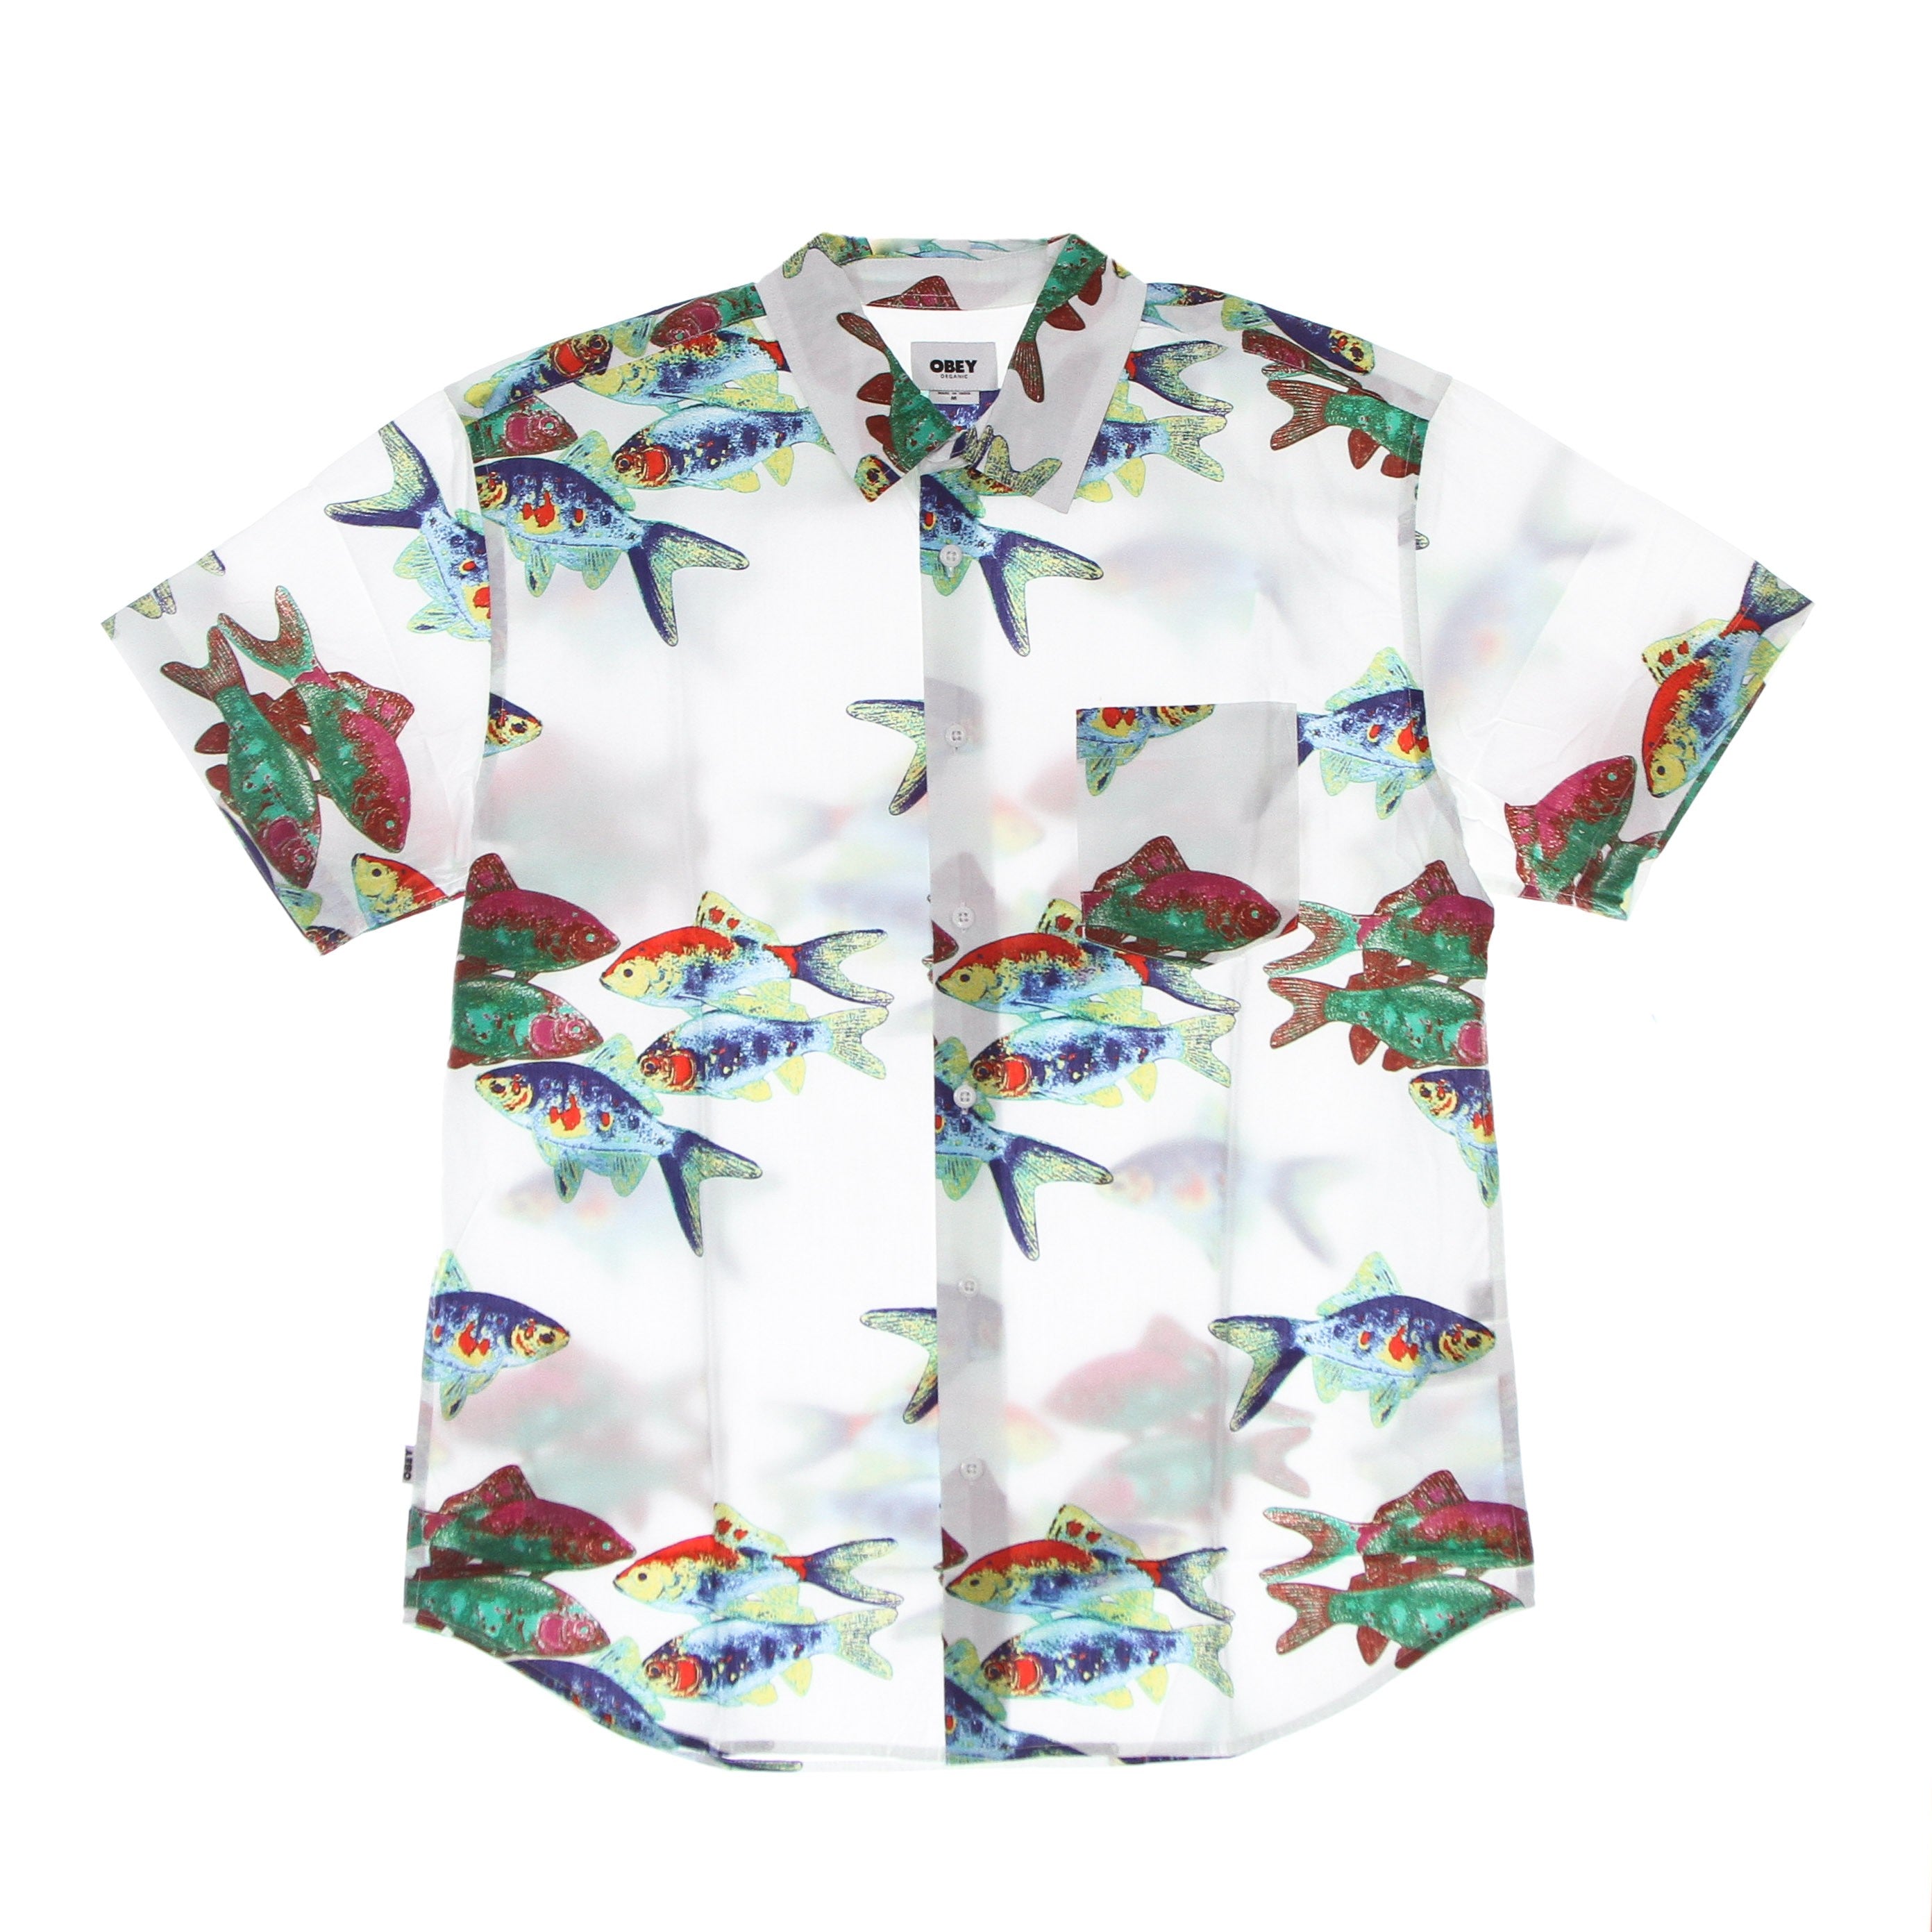 Fishbowl Woven Men's Short Sleeve Shirt